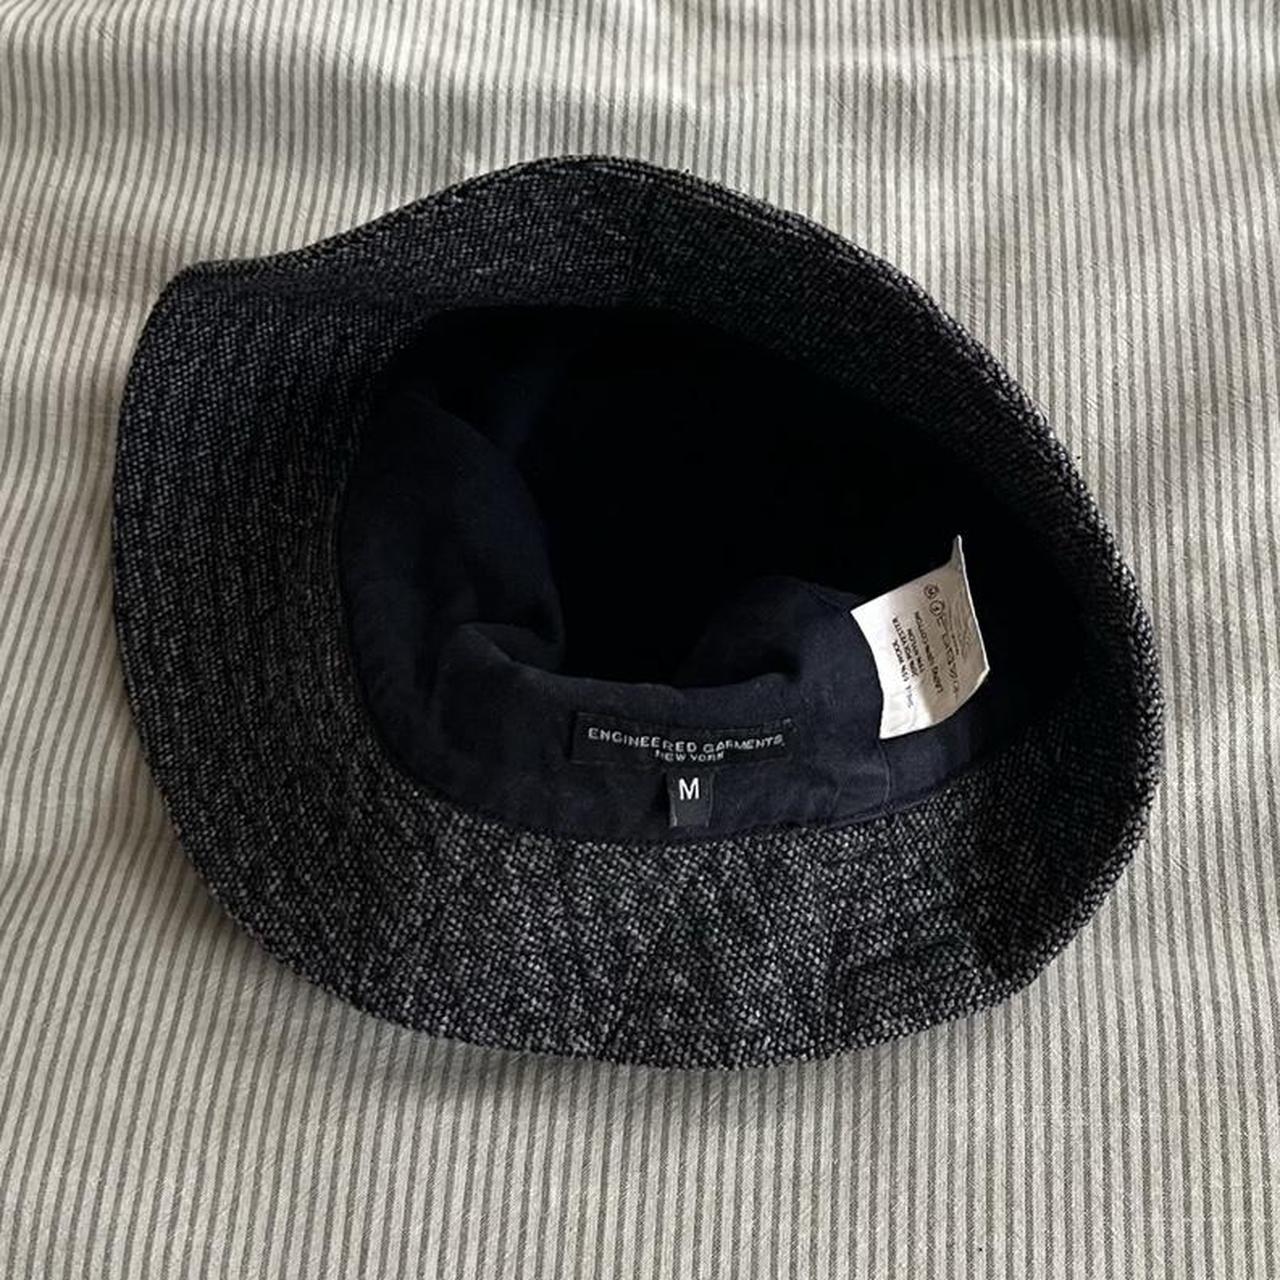 Engineered Garments Men's Black Hat (3)